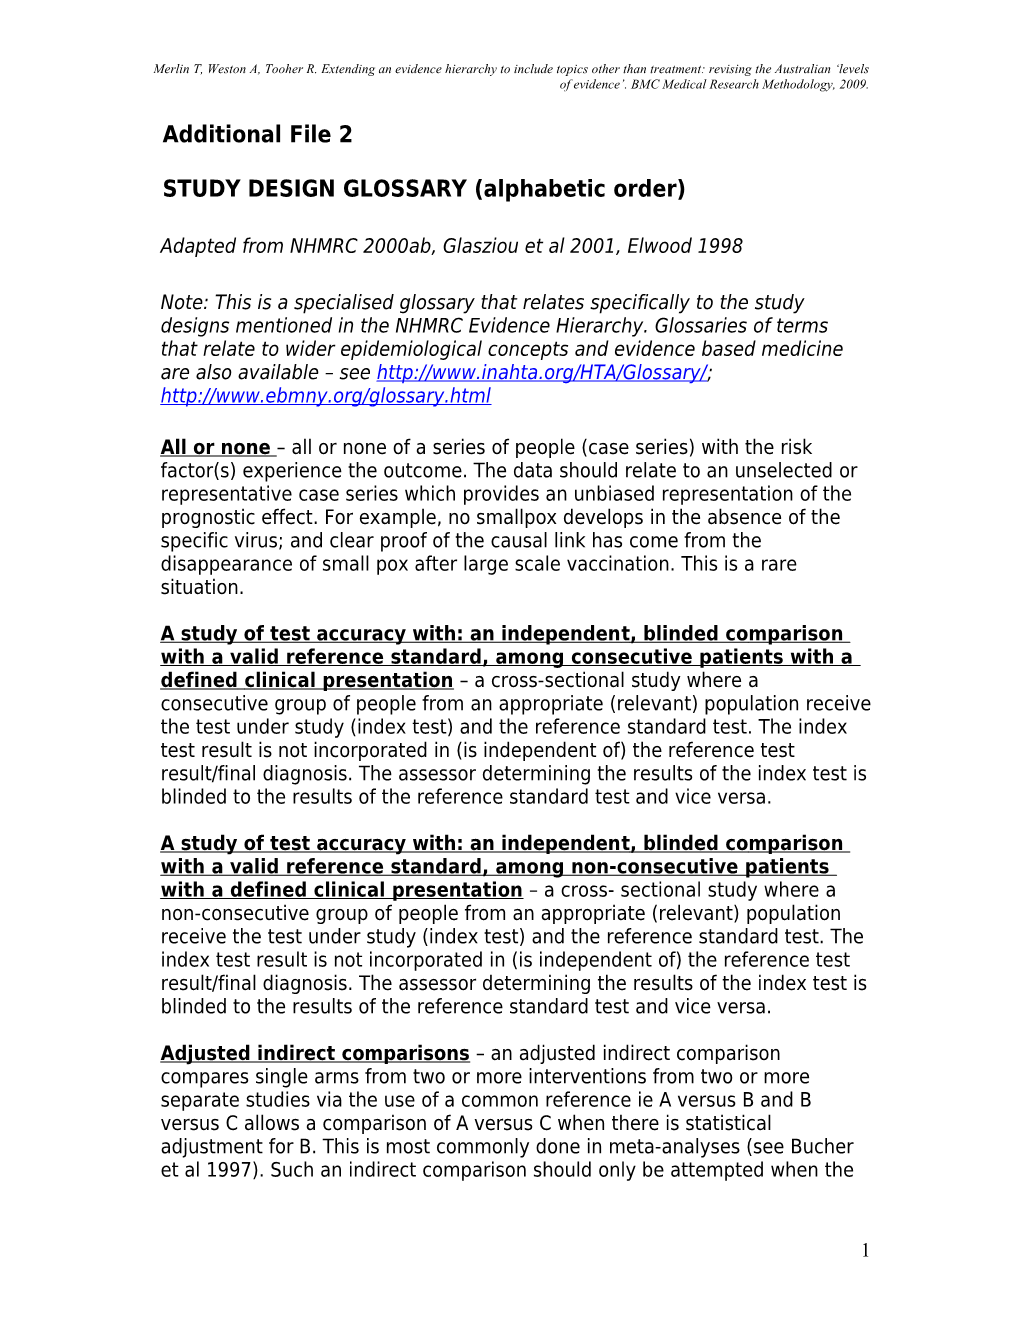 STUDY DESIGN GLOSSARY (Alphabetic Order)